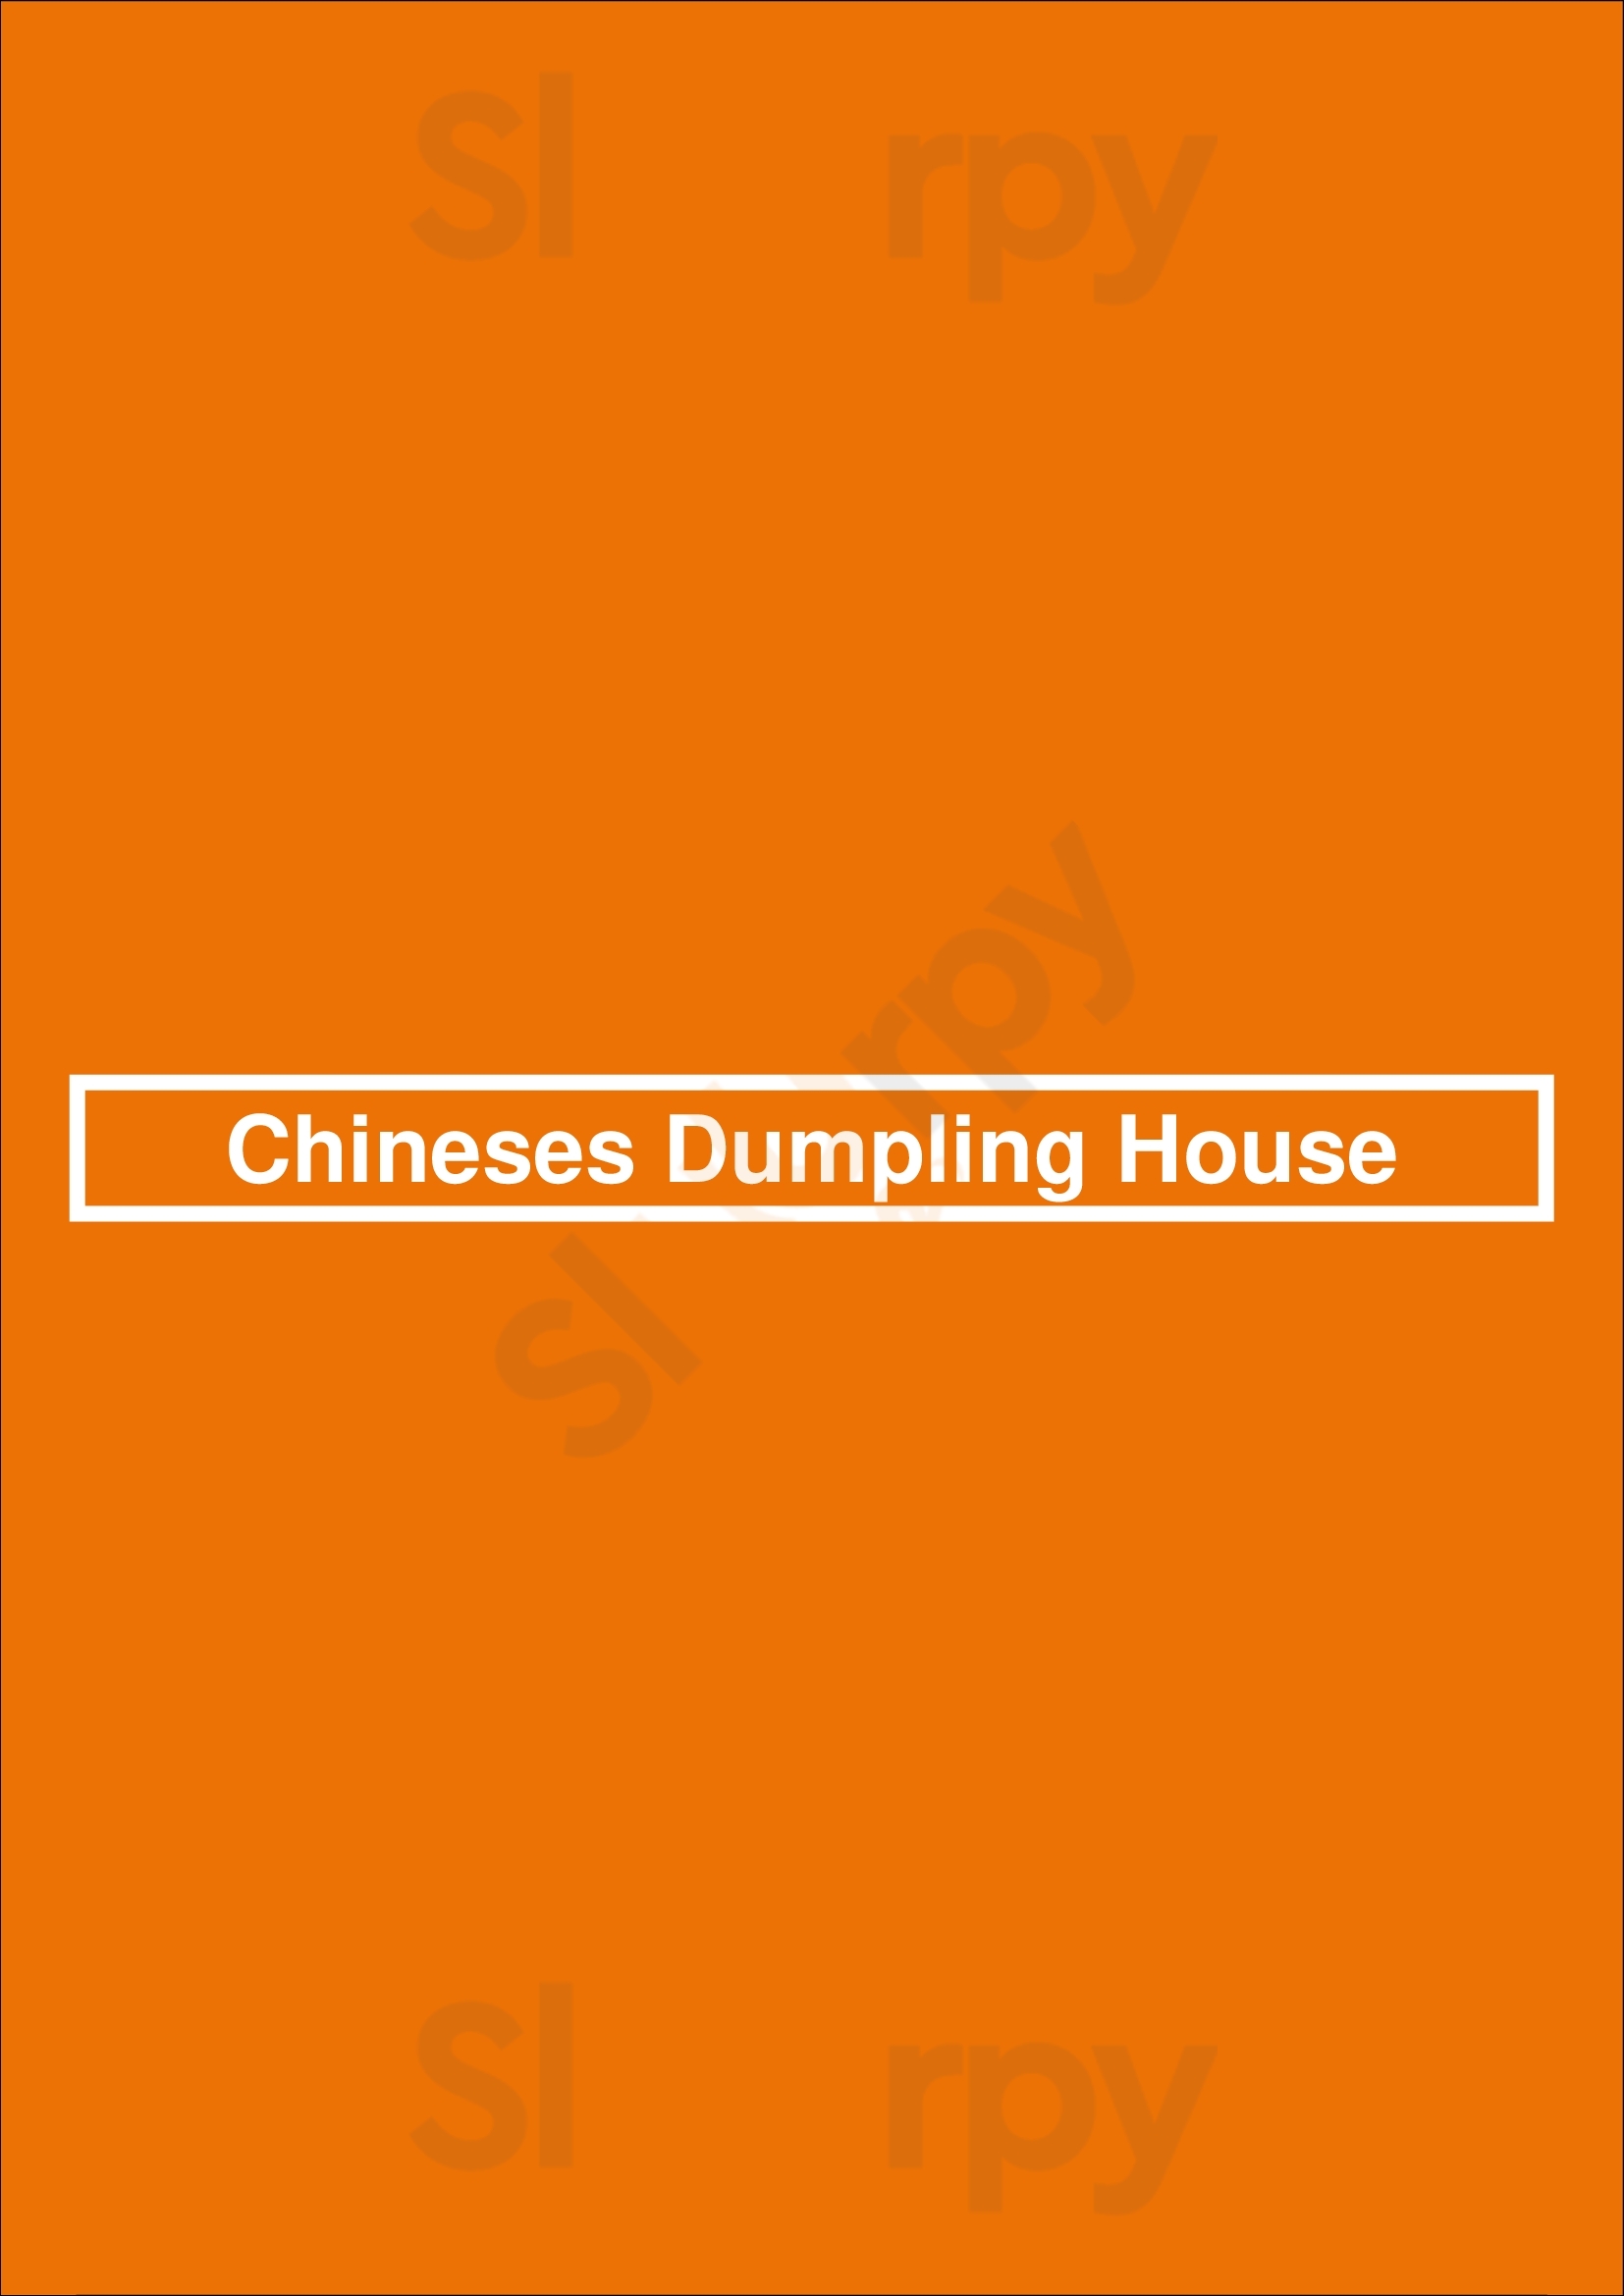 Chinese Dumpling House Mississauga Menu - 1